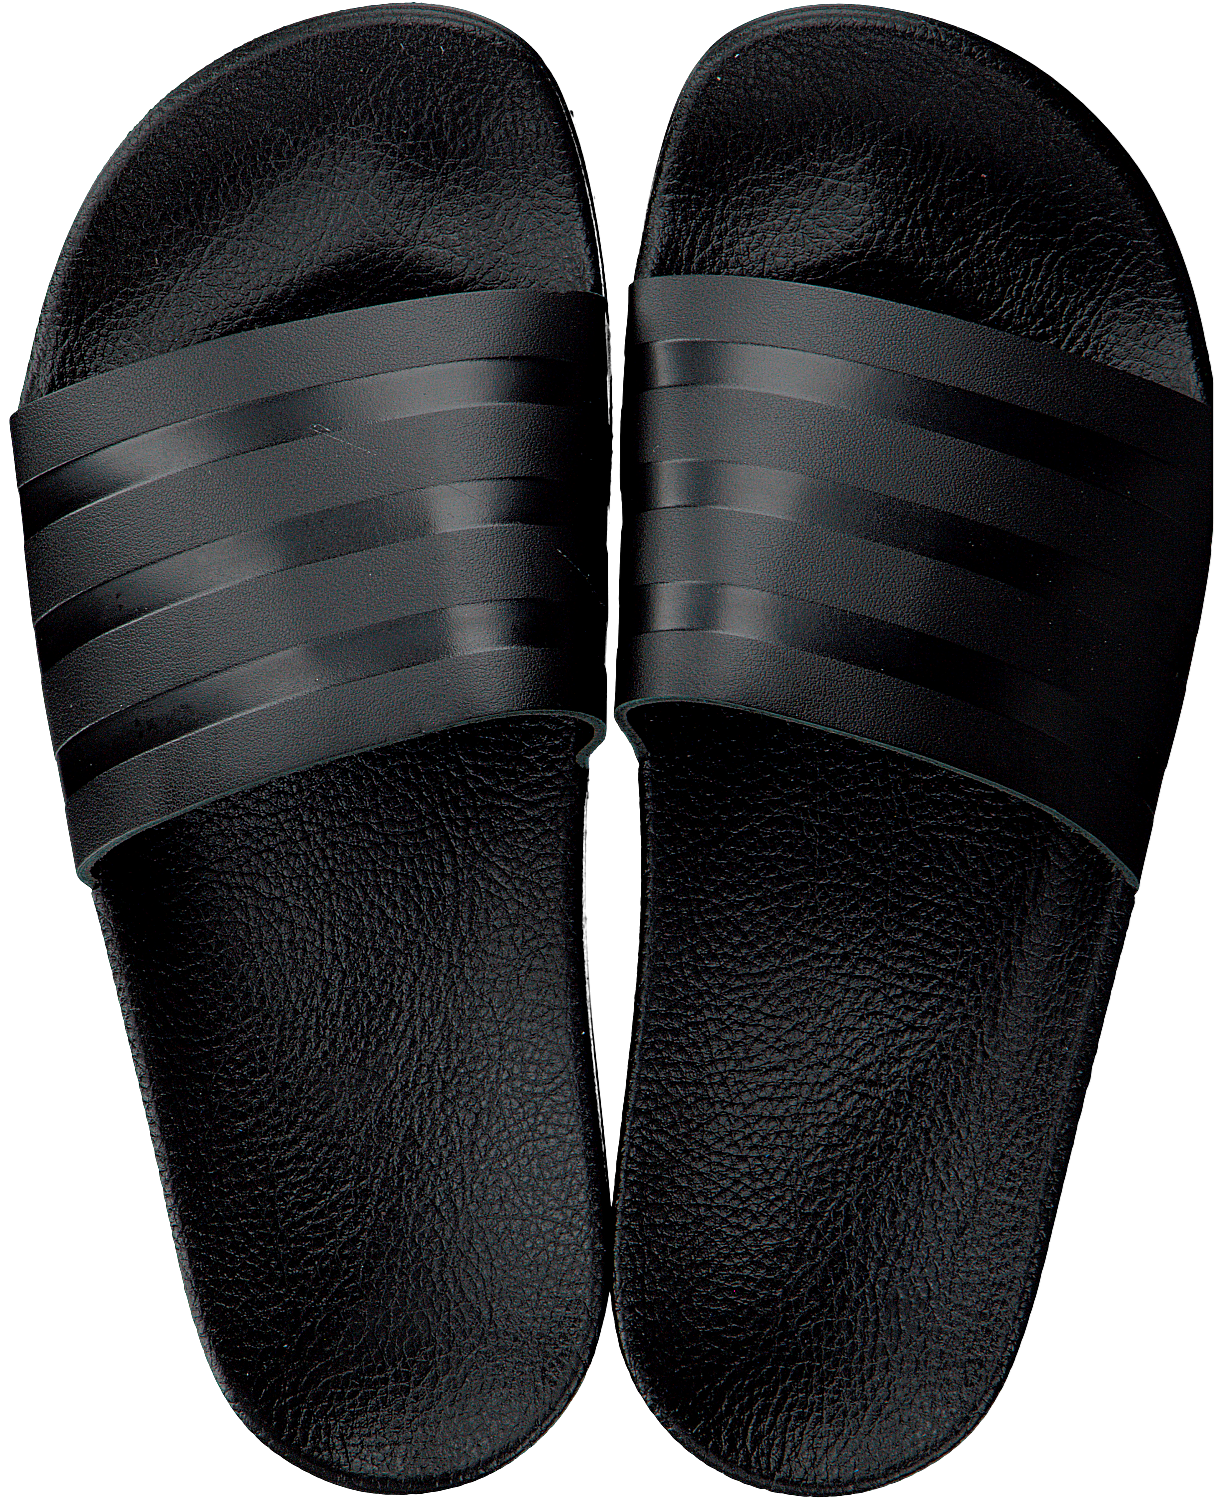 adidas slippers zwart